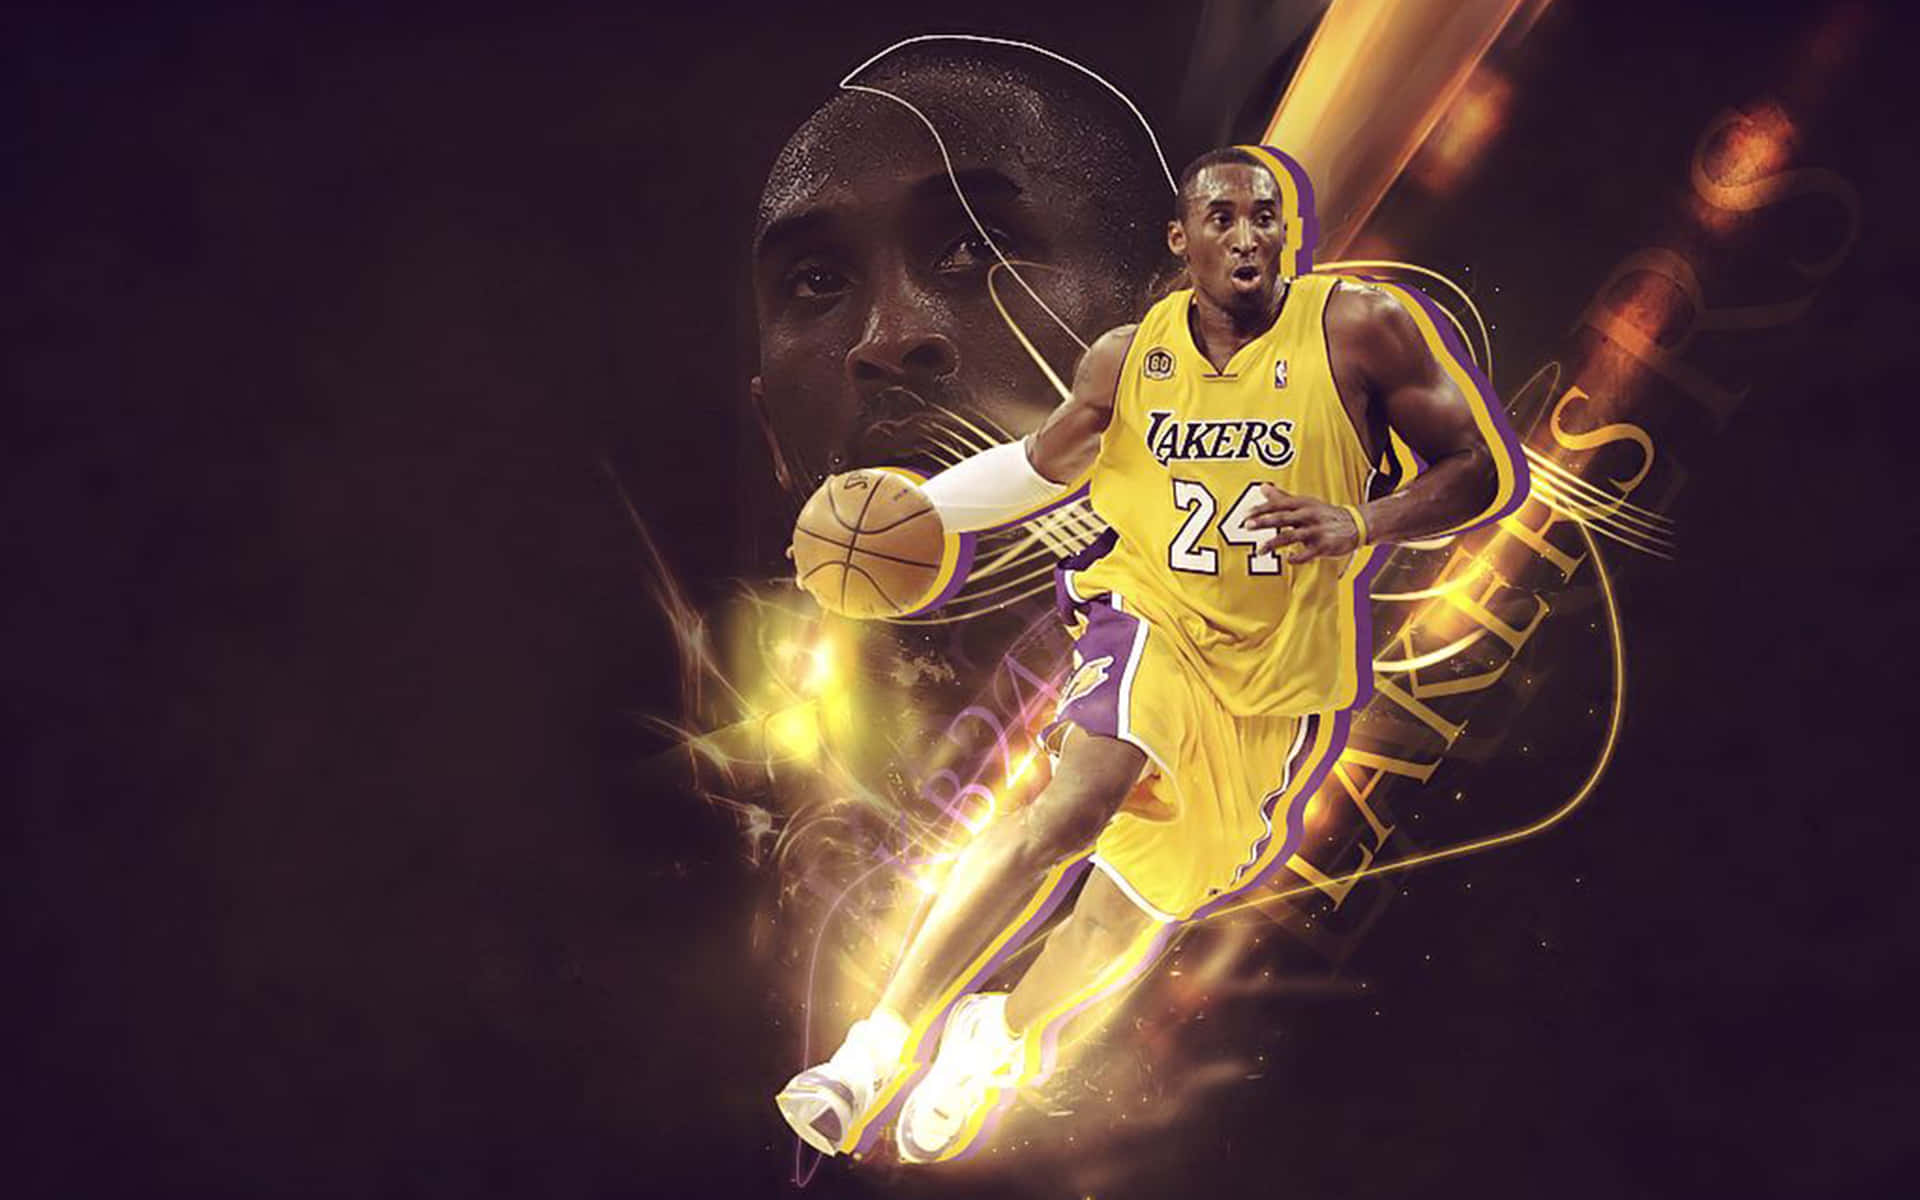 Lendado Los Angeles Lakers, Kobe Bryant